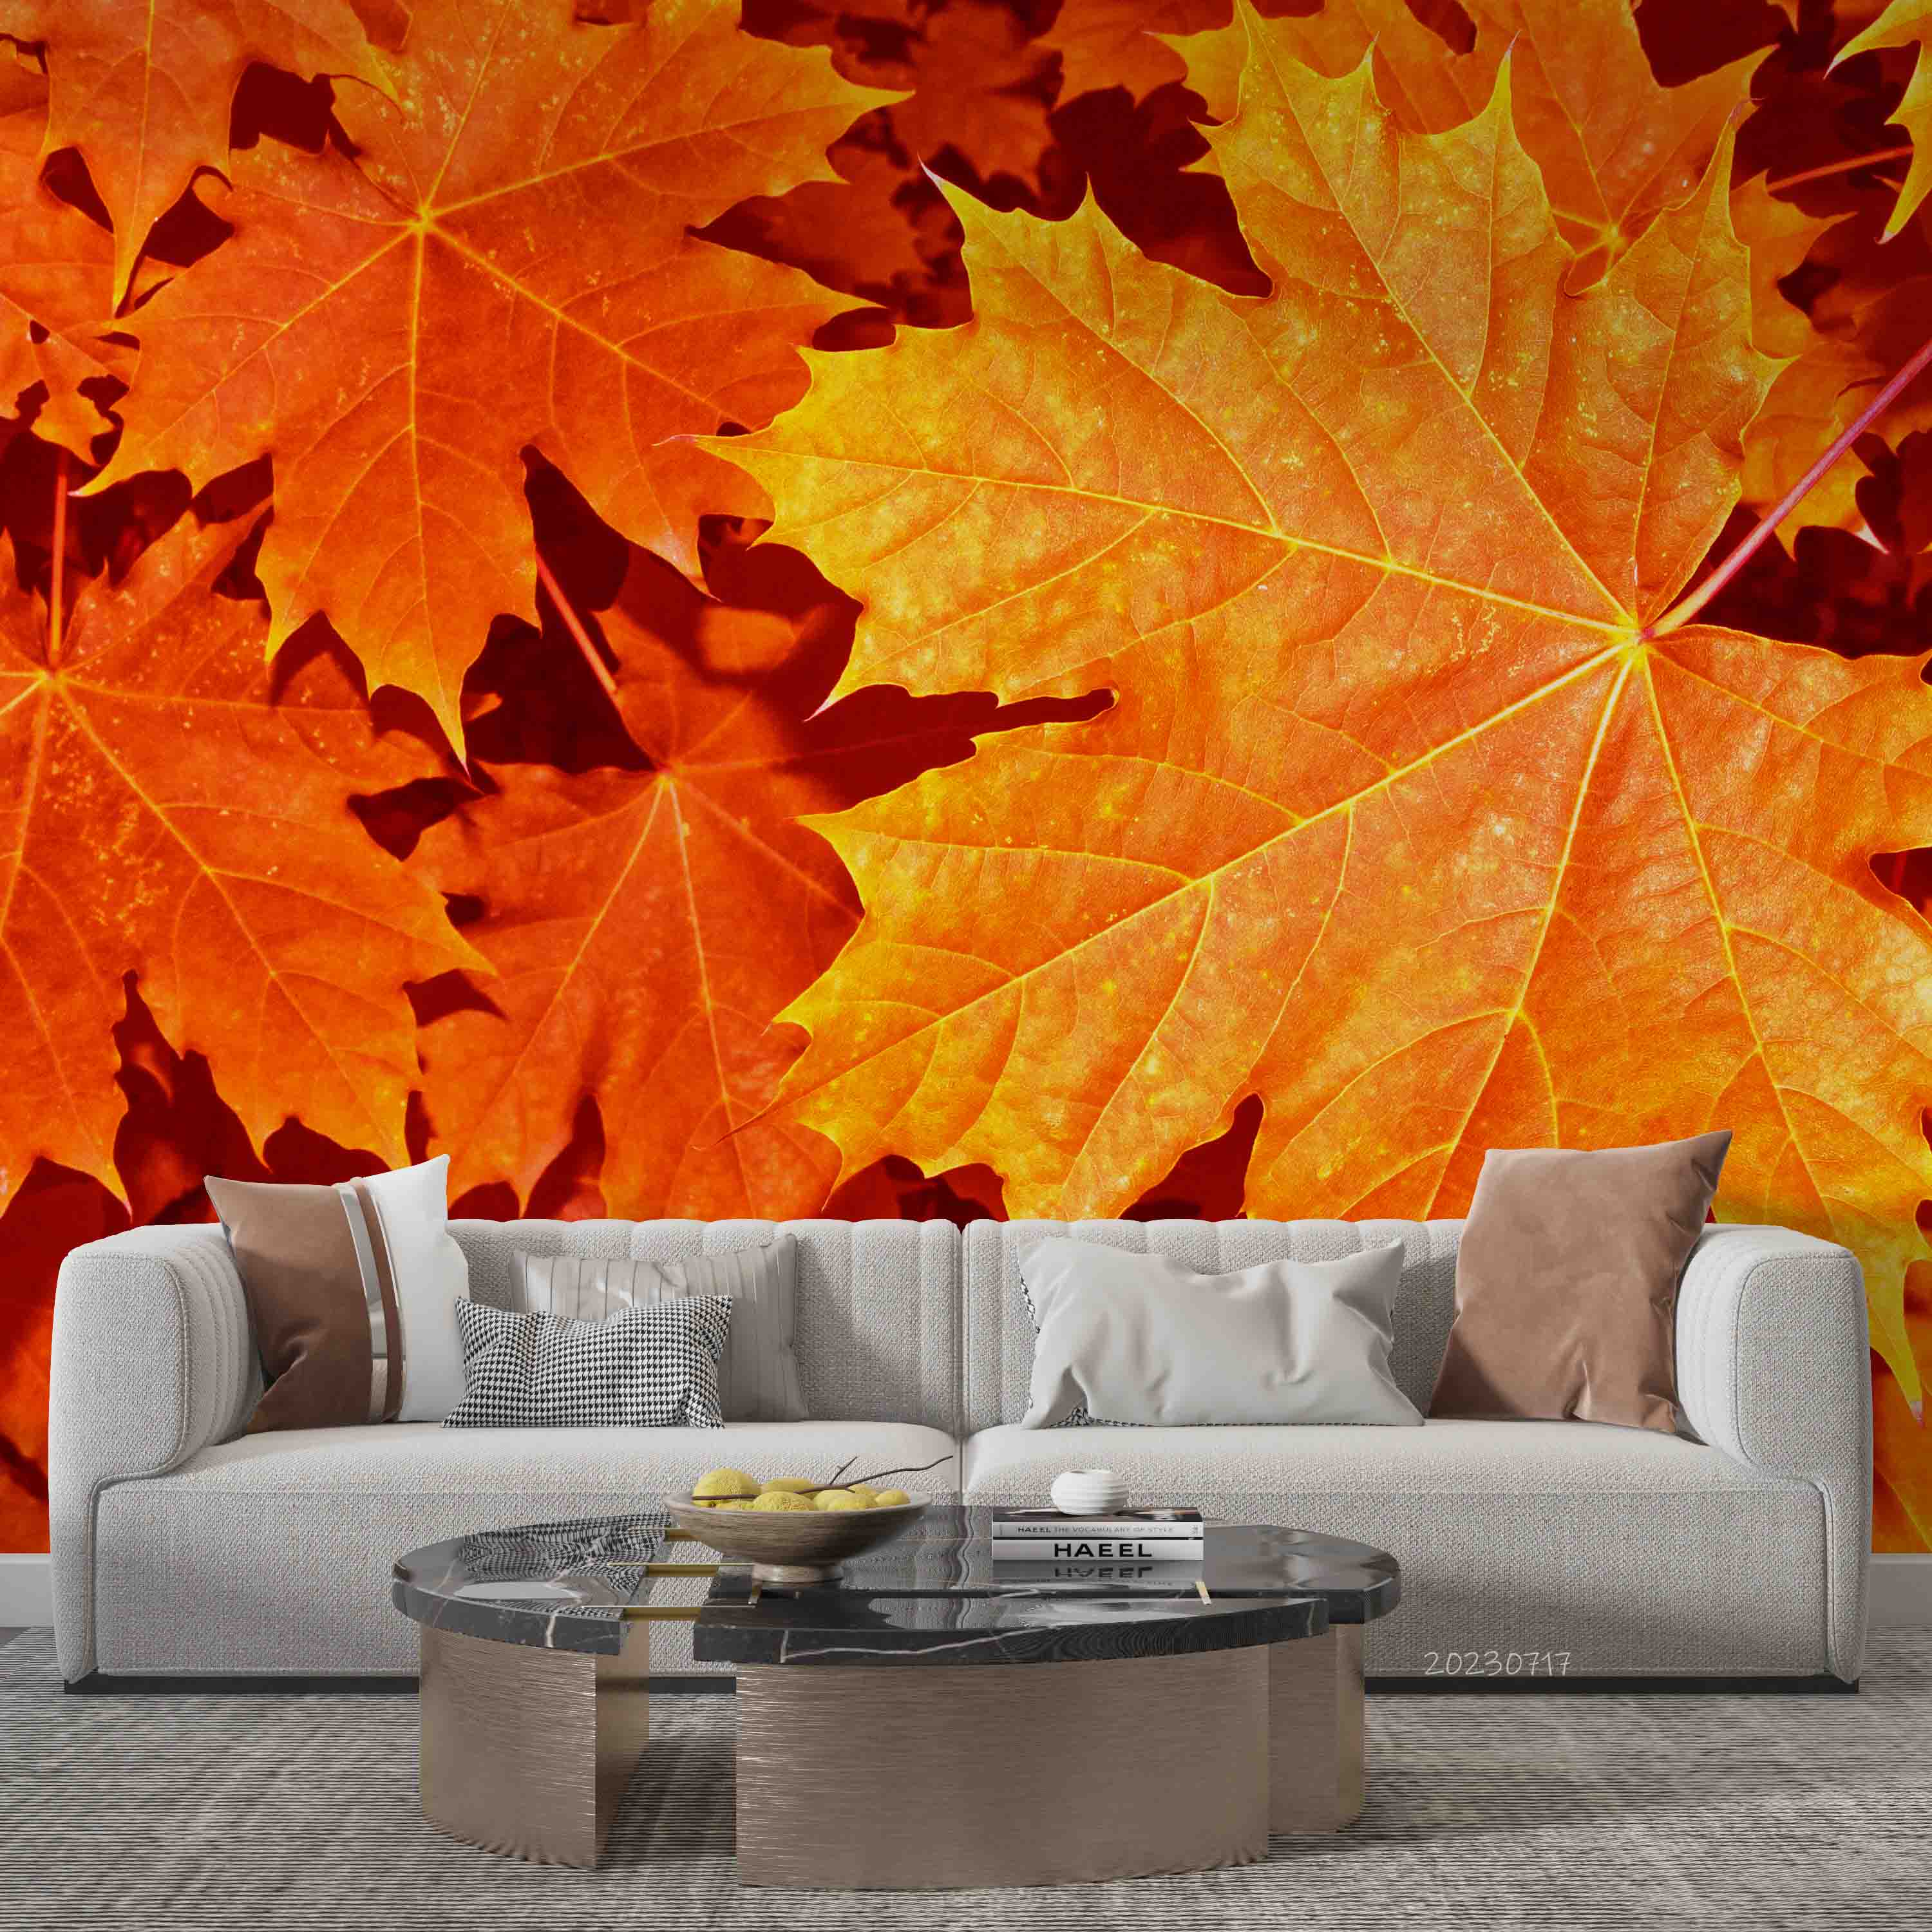 3D Maple Leaves Autumn Landscape Wall Mural Wallpaper JN 404